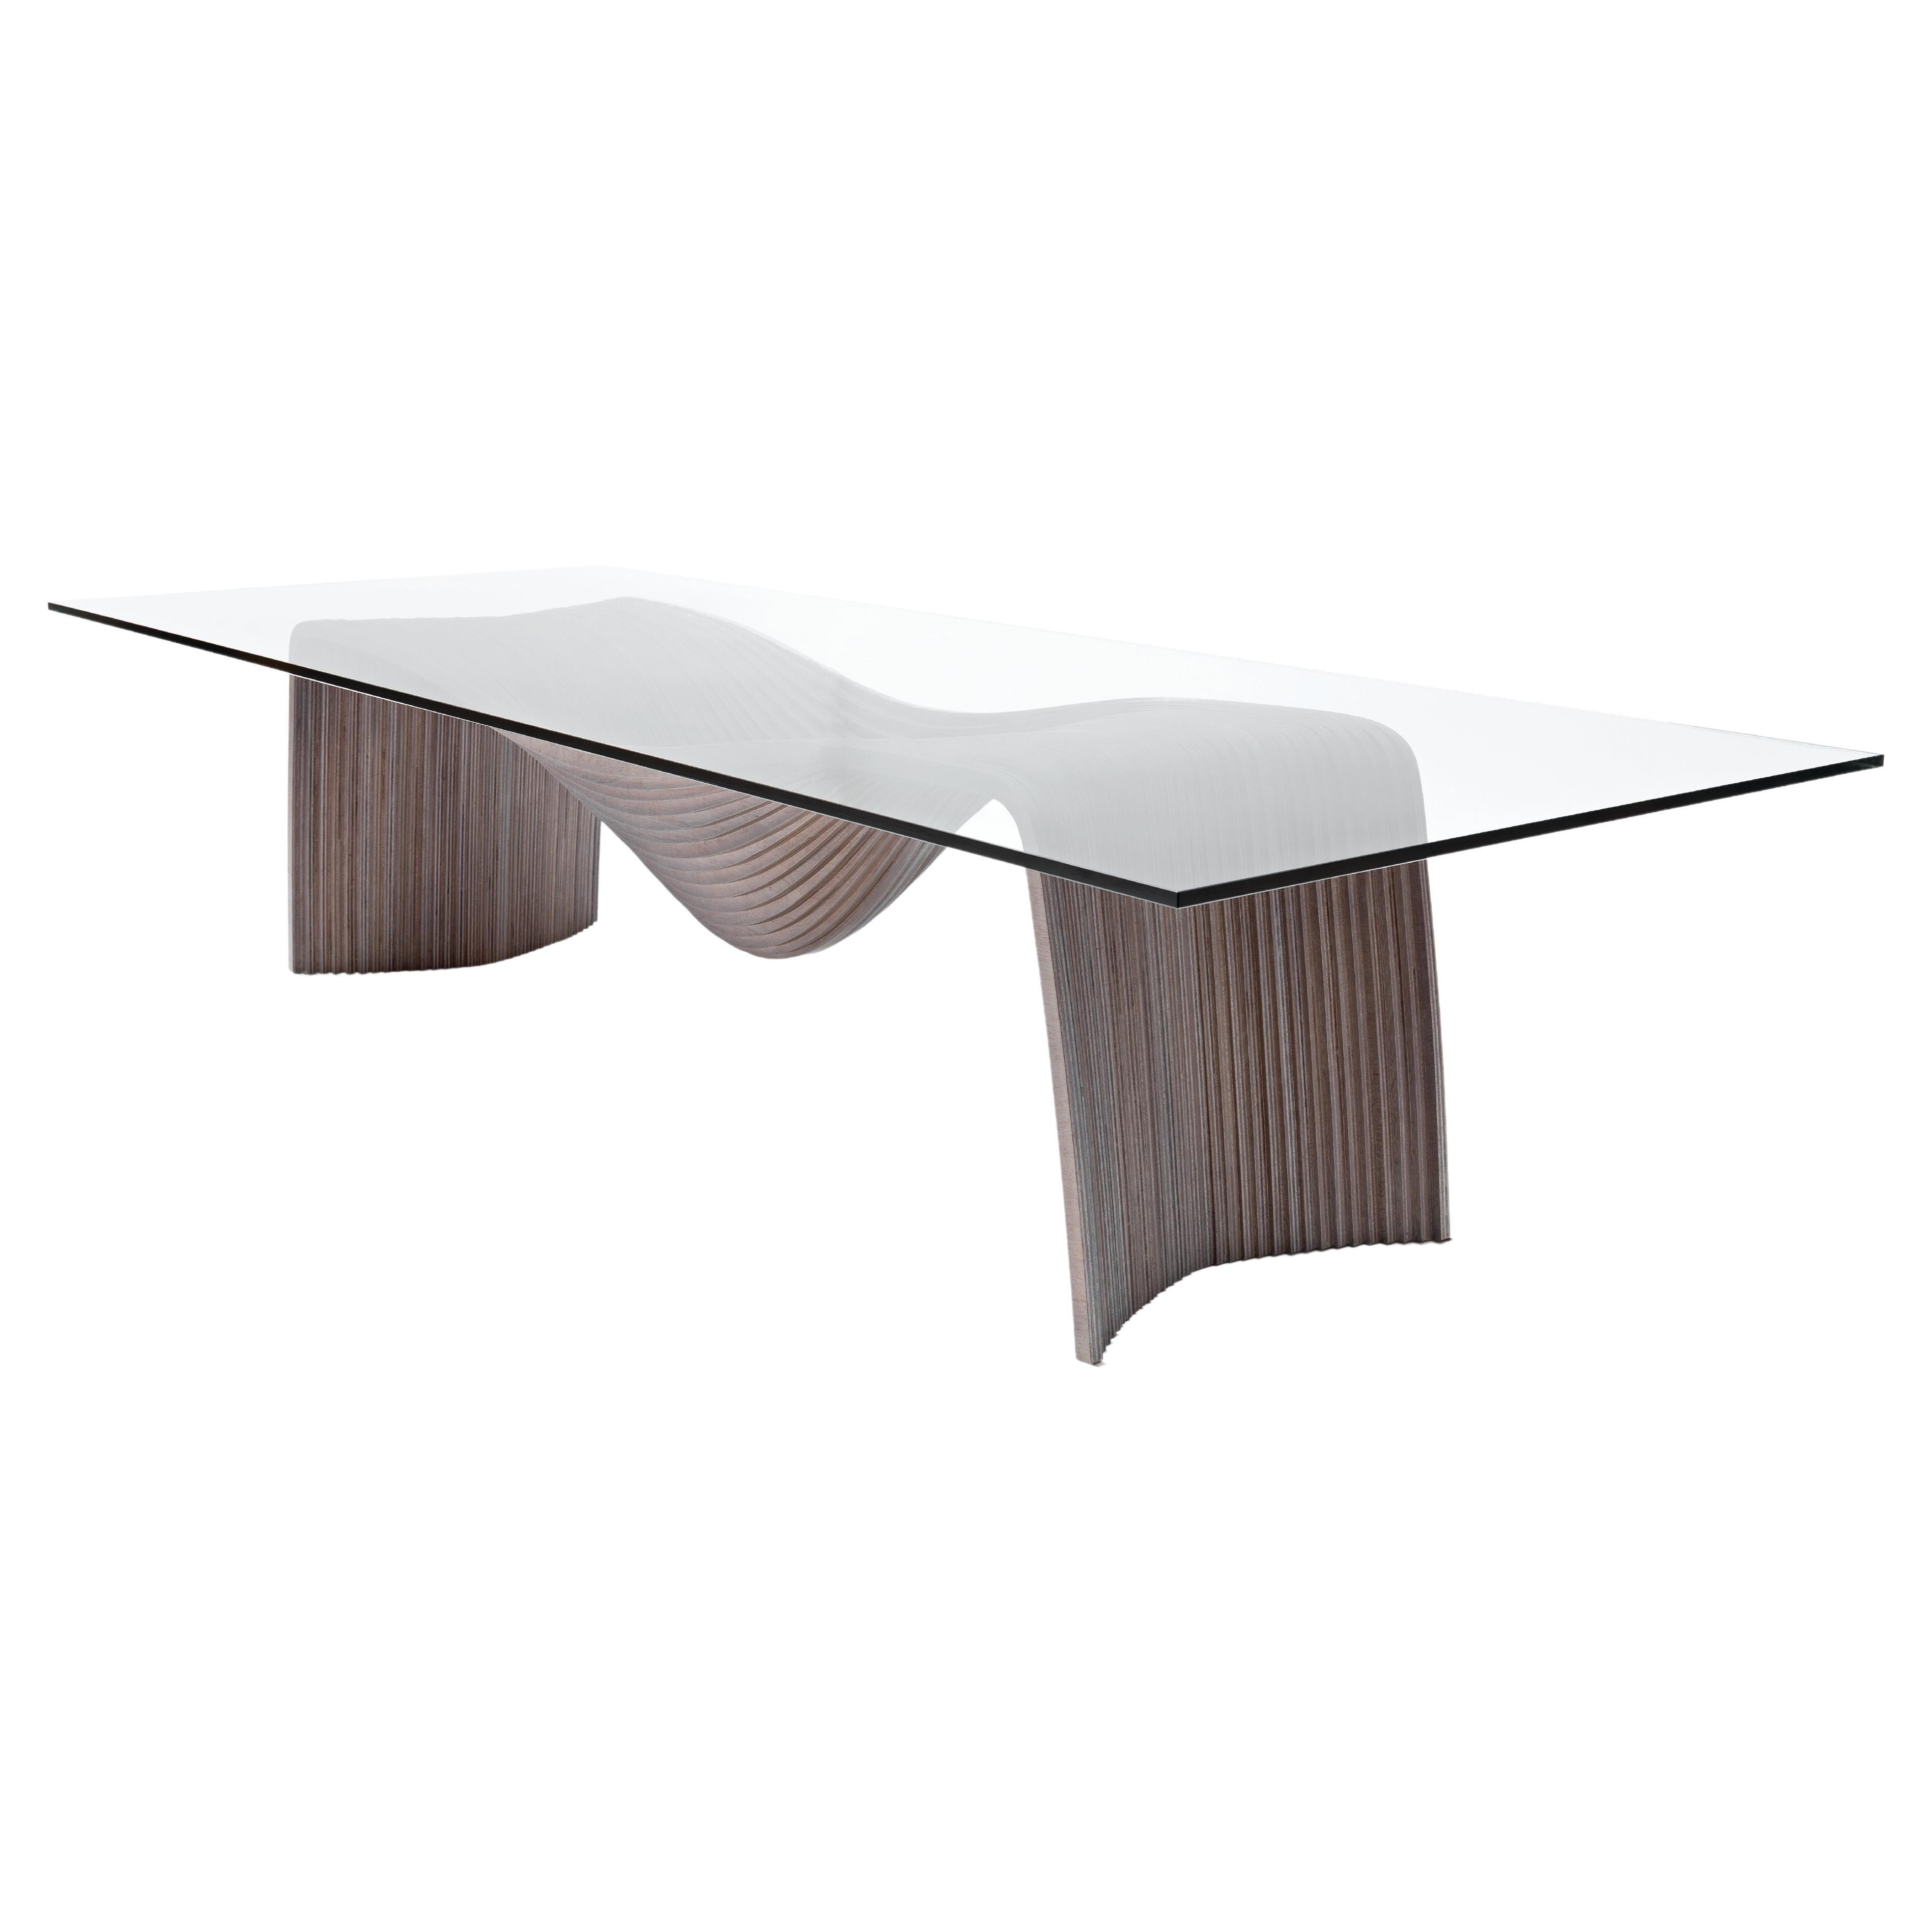 Table Corozo de Piegatto, une table sculpturale contemporaine en vente